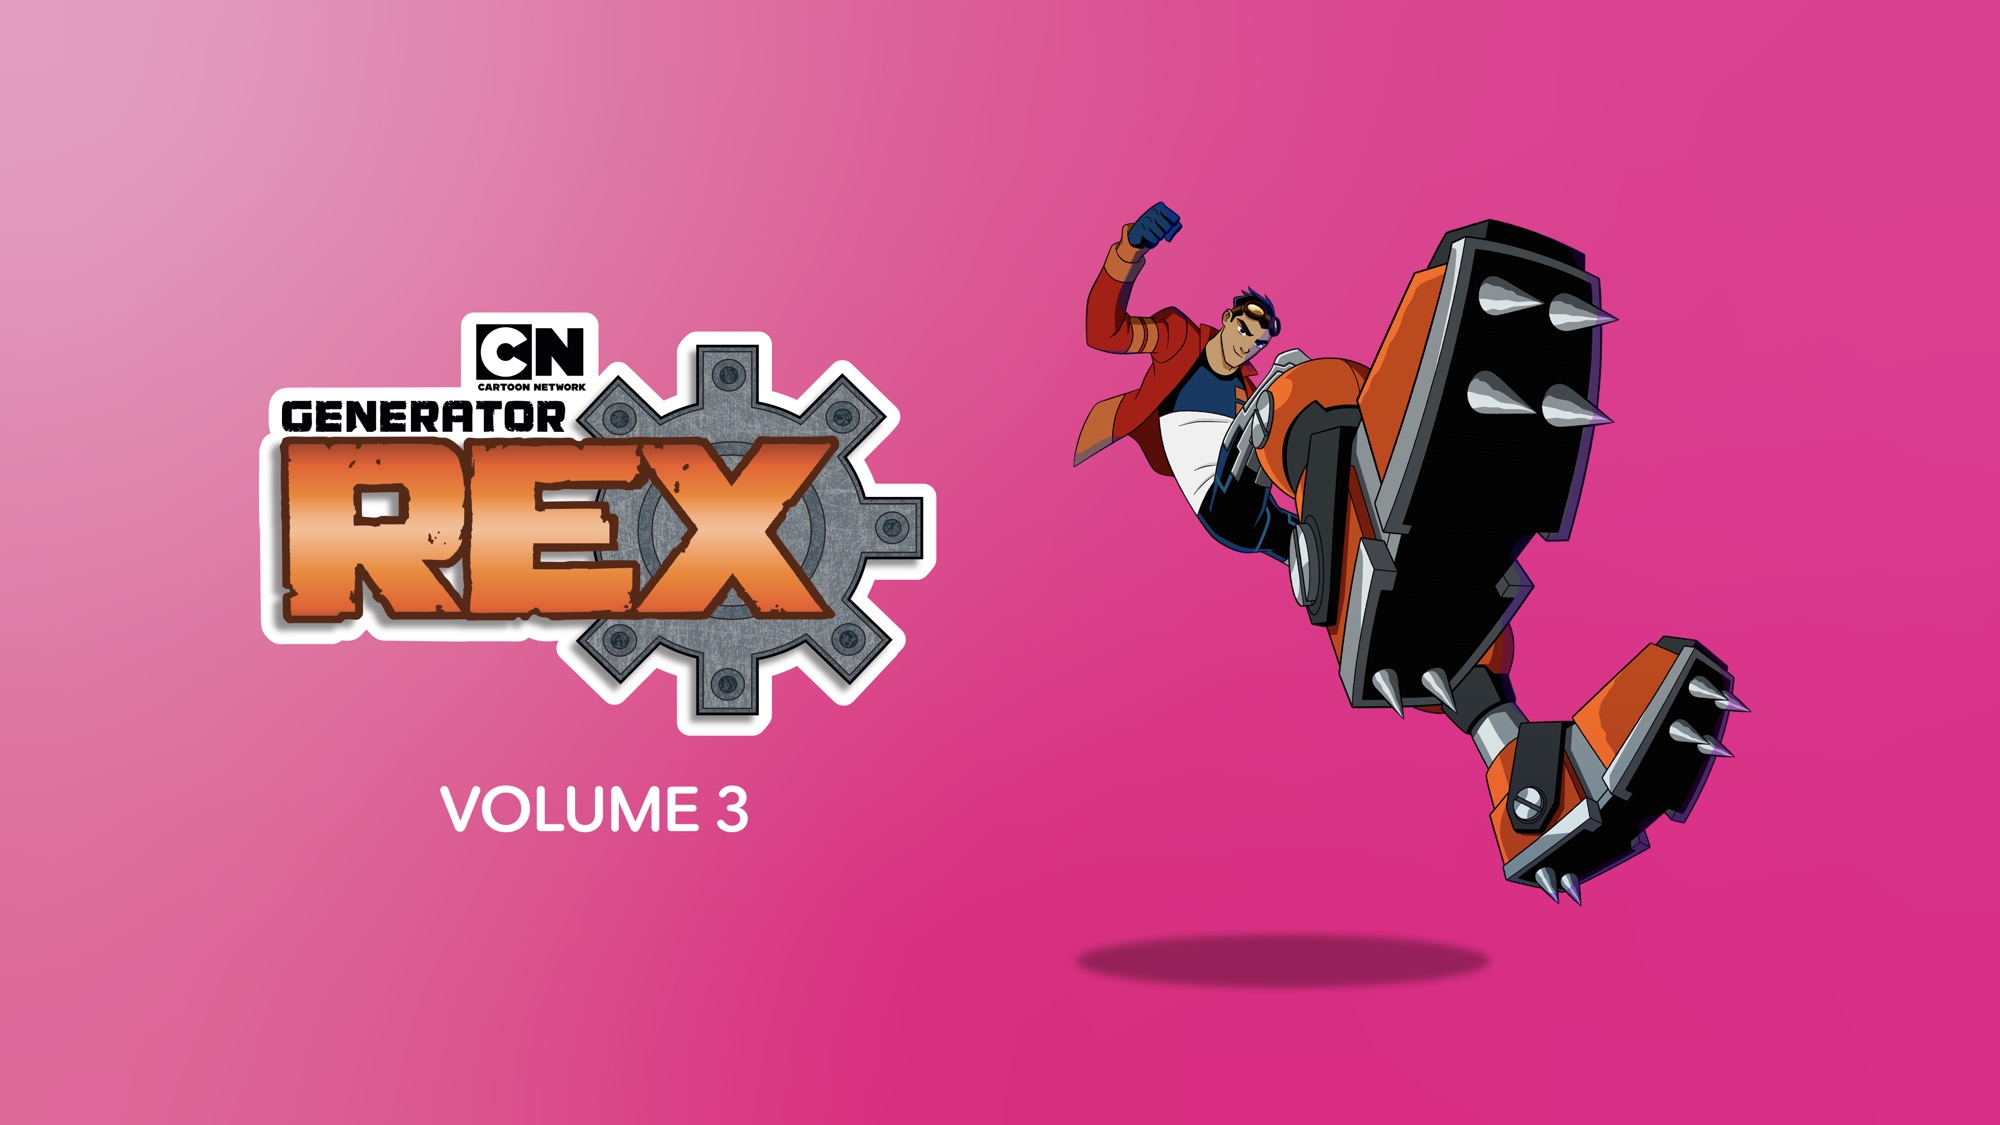 TV Show Generator Rex HD Wallpaper | Background Image